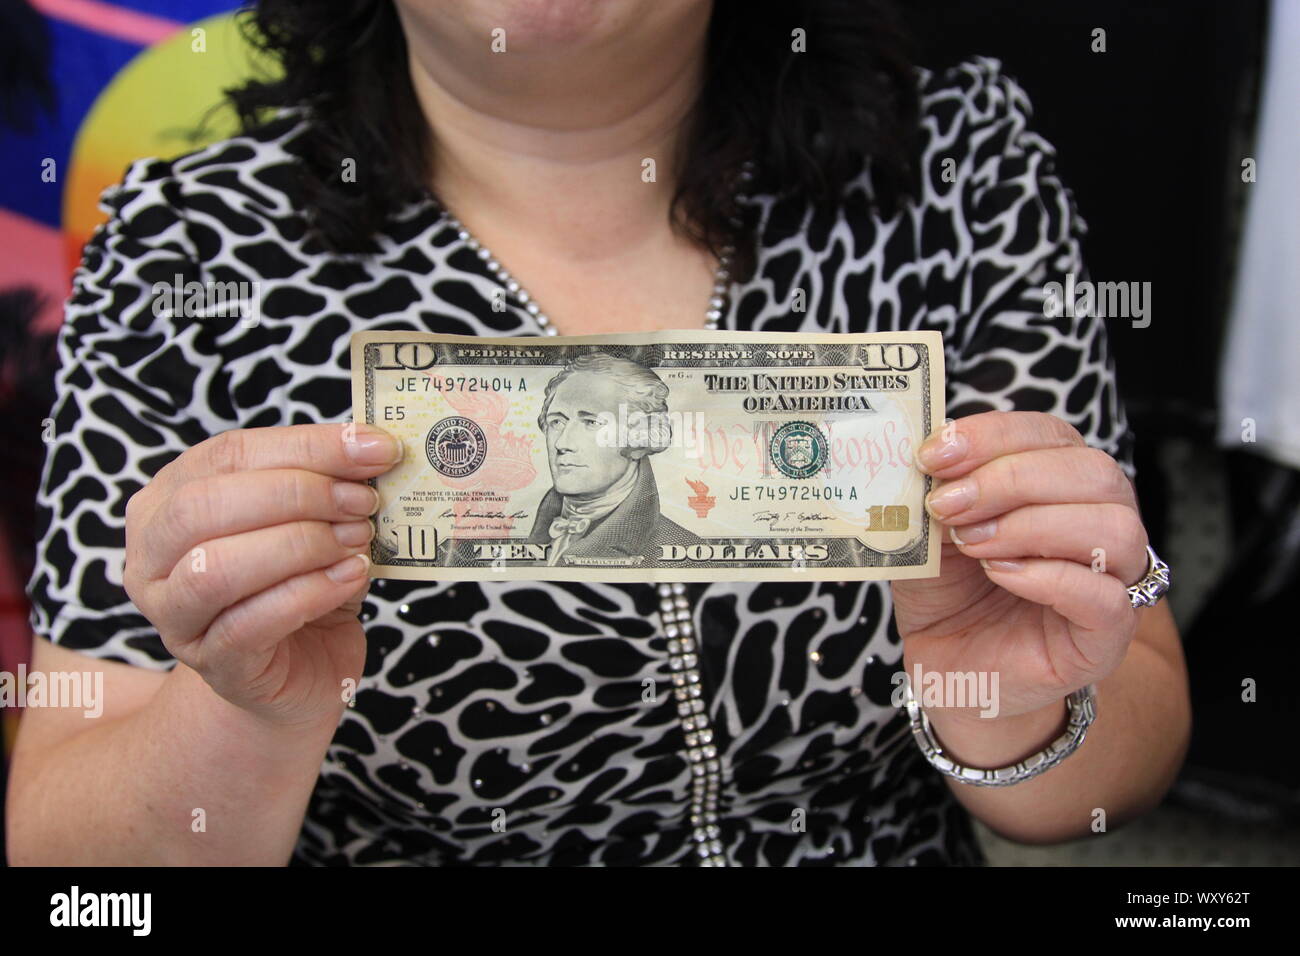 A WOMAN HOLDING A $10 DOLLAR NOTE. MONEY. CURRENCY. WORLD CURRECIES. THE US DOLLAR. DOLLARS. ECONOMY. ECONOMICAL. ECONOMICS. CASH. PAPER MONEY. CASH SOCIETY. CASHLESS SOCIETY. WONGA. DOSH. GREEN BACK. FEMALE HOLDING MONEY. POCKET MONEY. POVERTY. CHILD POVERTY. BILL. BILLS. TEN DOLLAR BILL. Girl Boss. Women entrepreneurs. Stock Photo